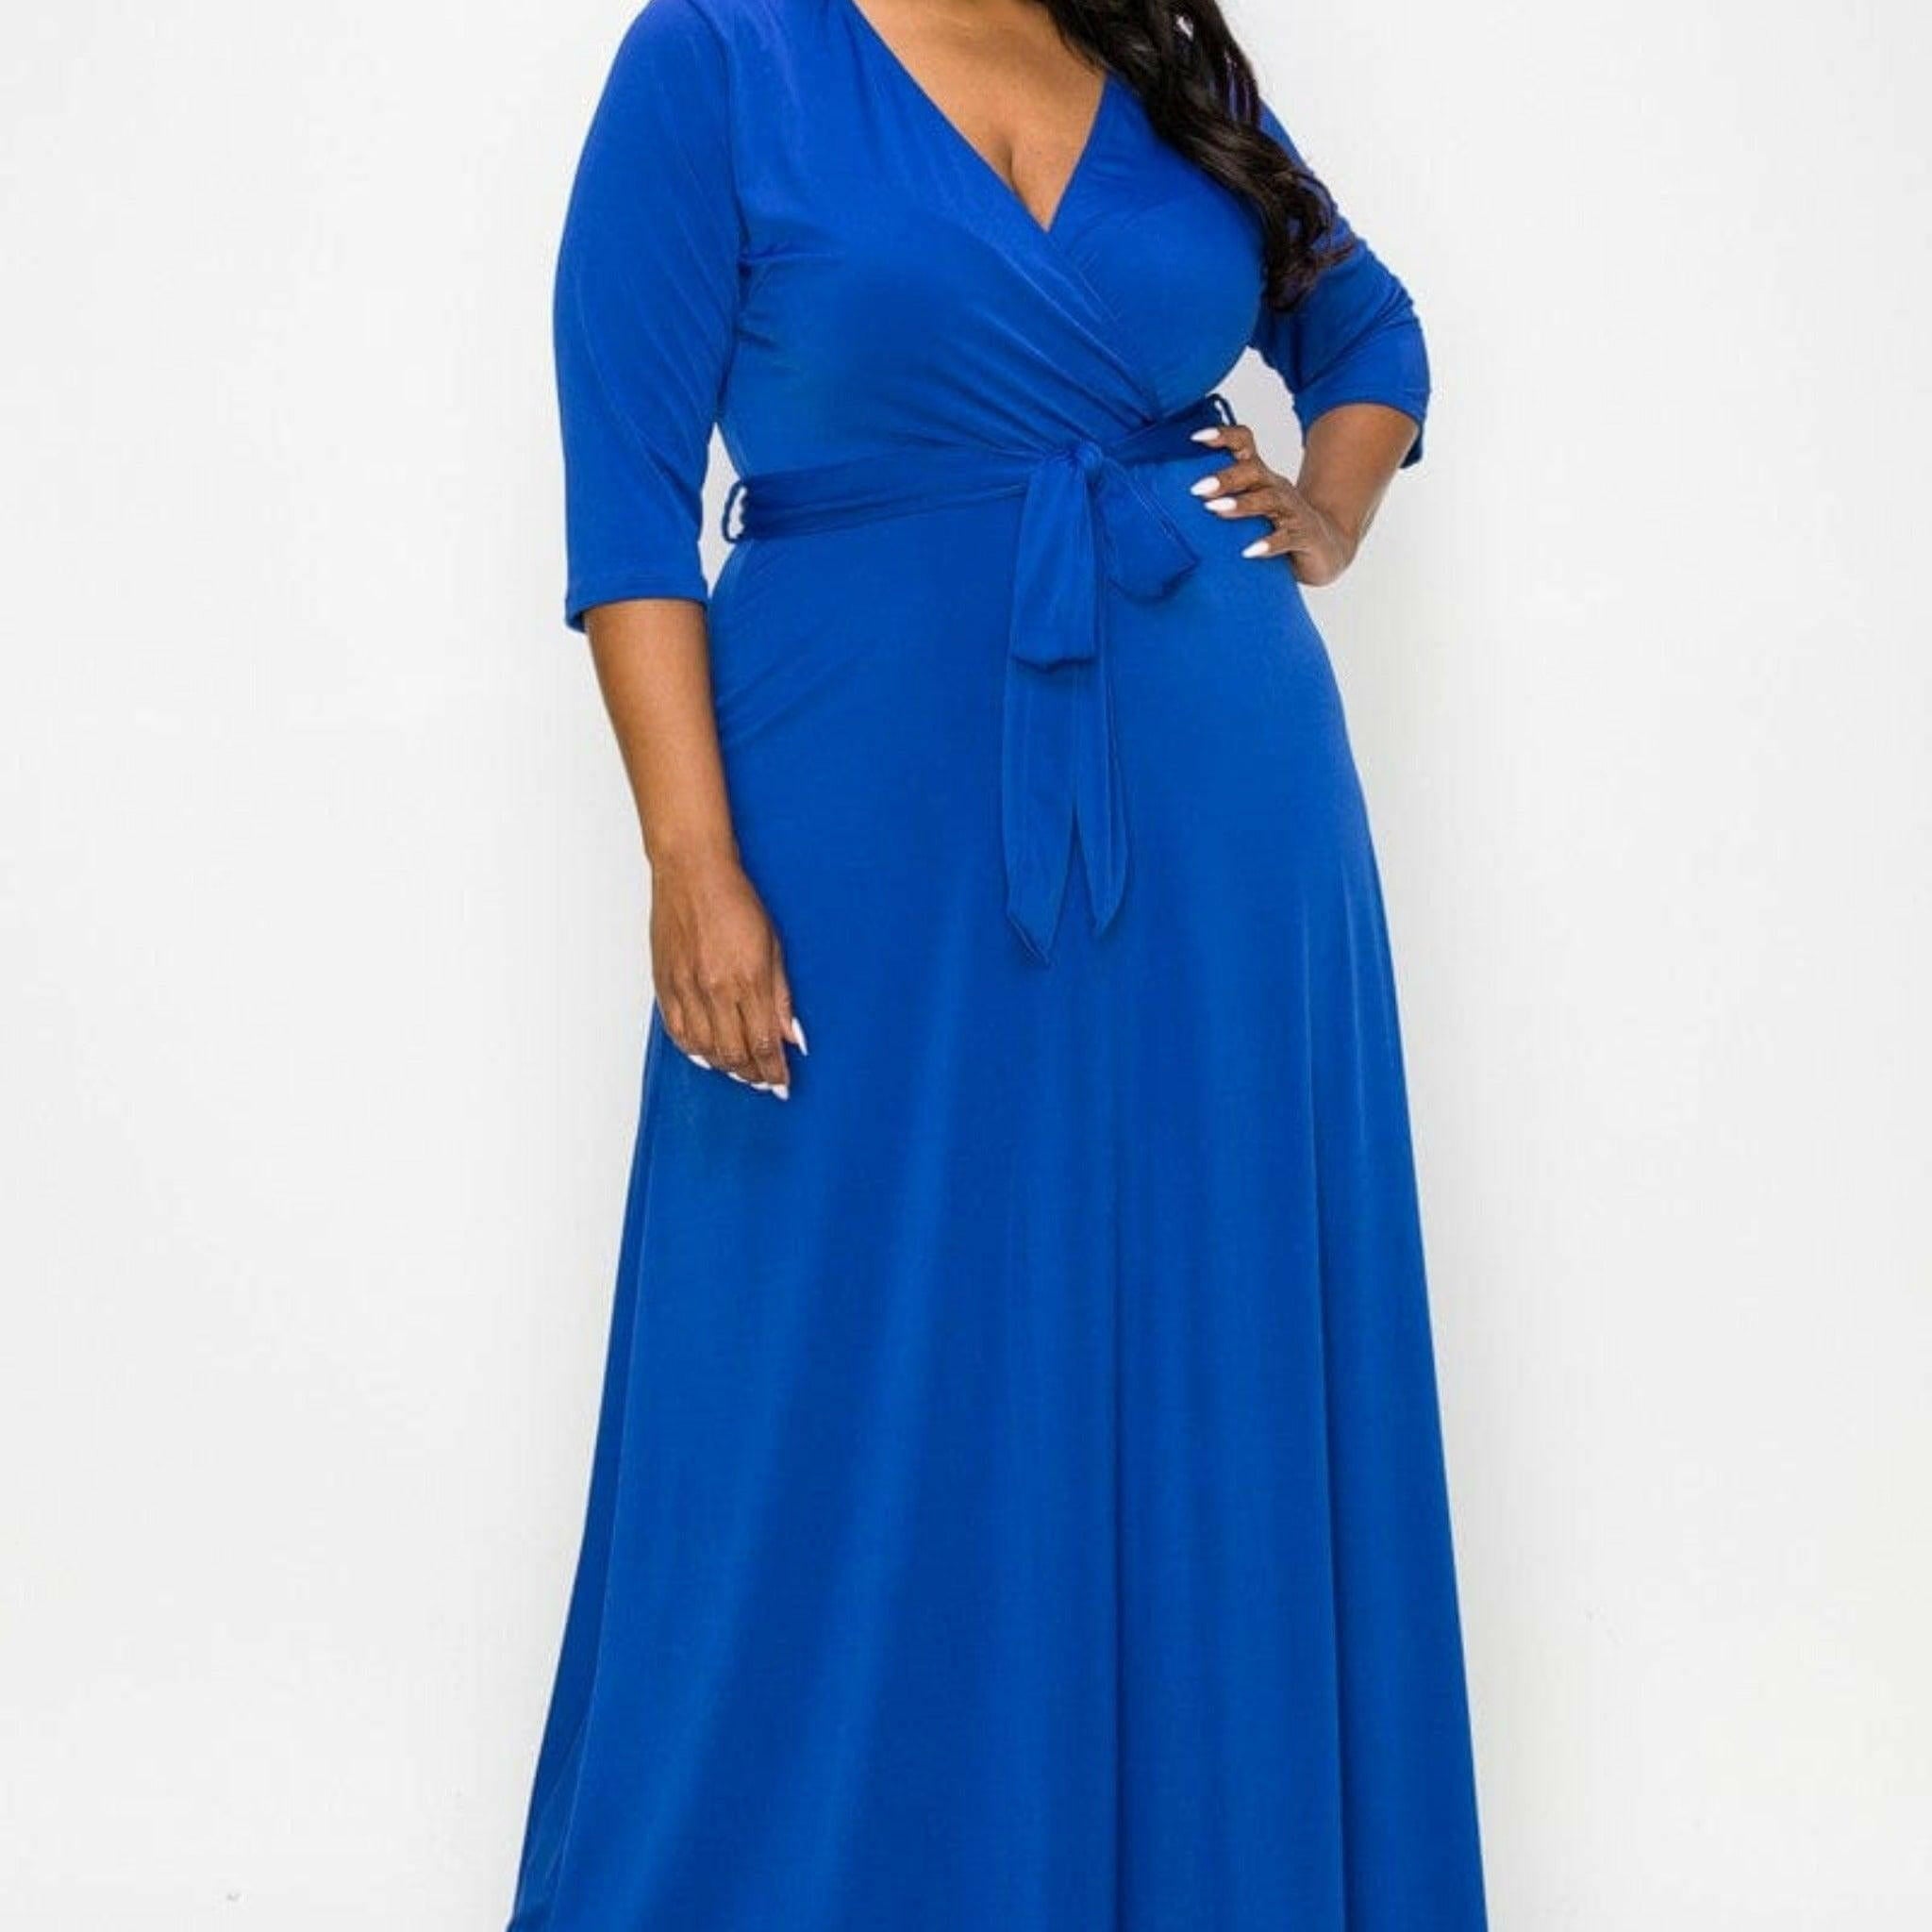 Epicplacess Dress 1X / BLUE / UNTED STATES MY GODDESS TWIST FRONT MAXI DRESS SD1115-SS2